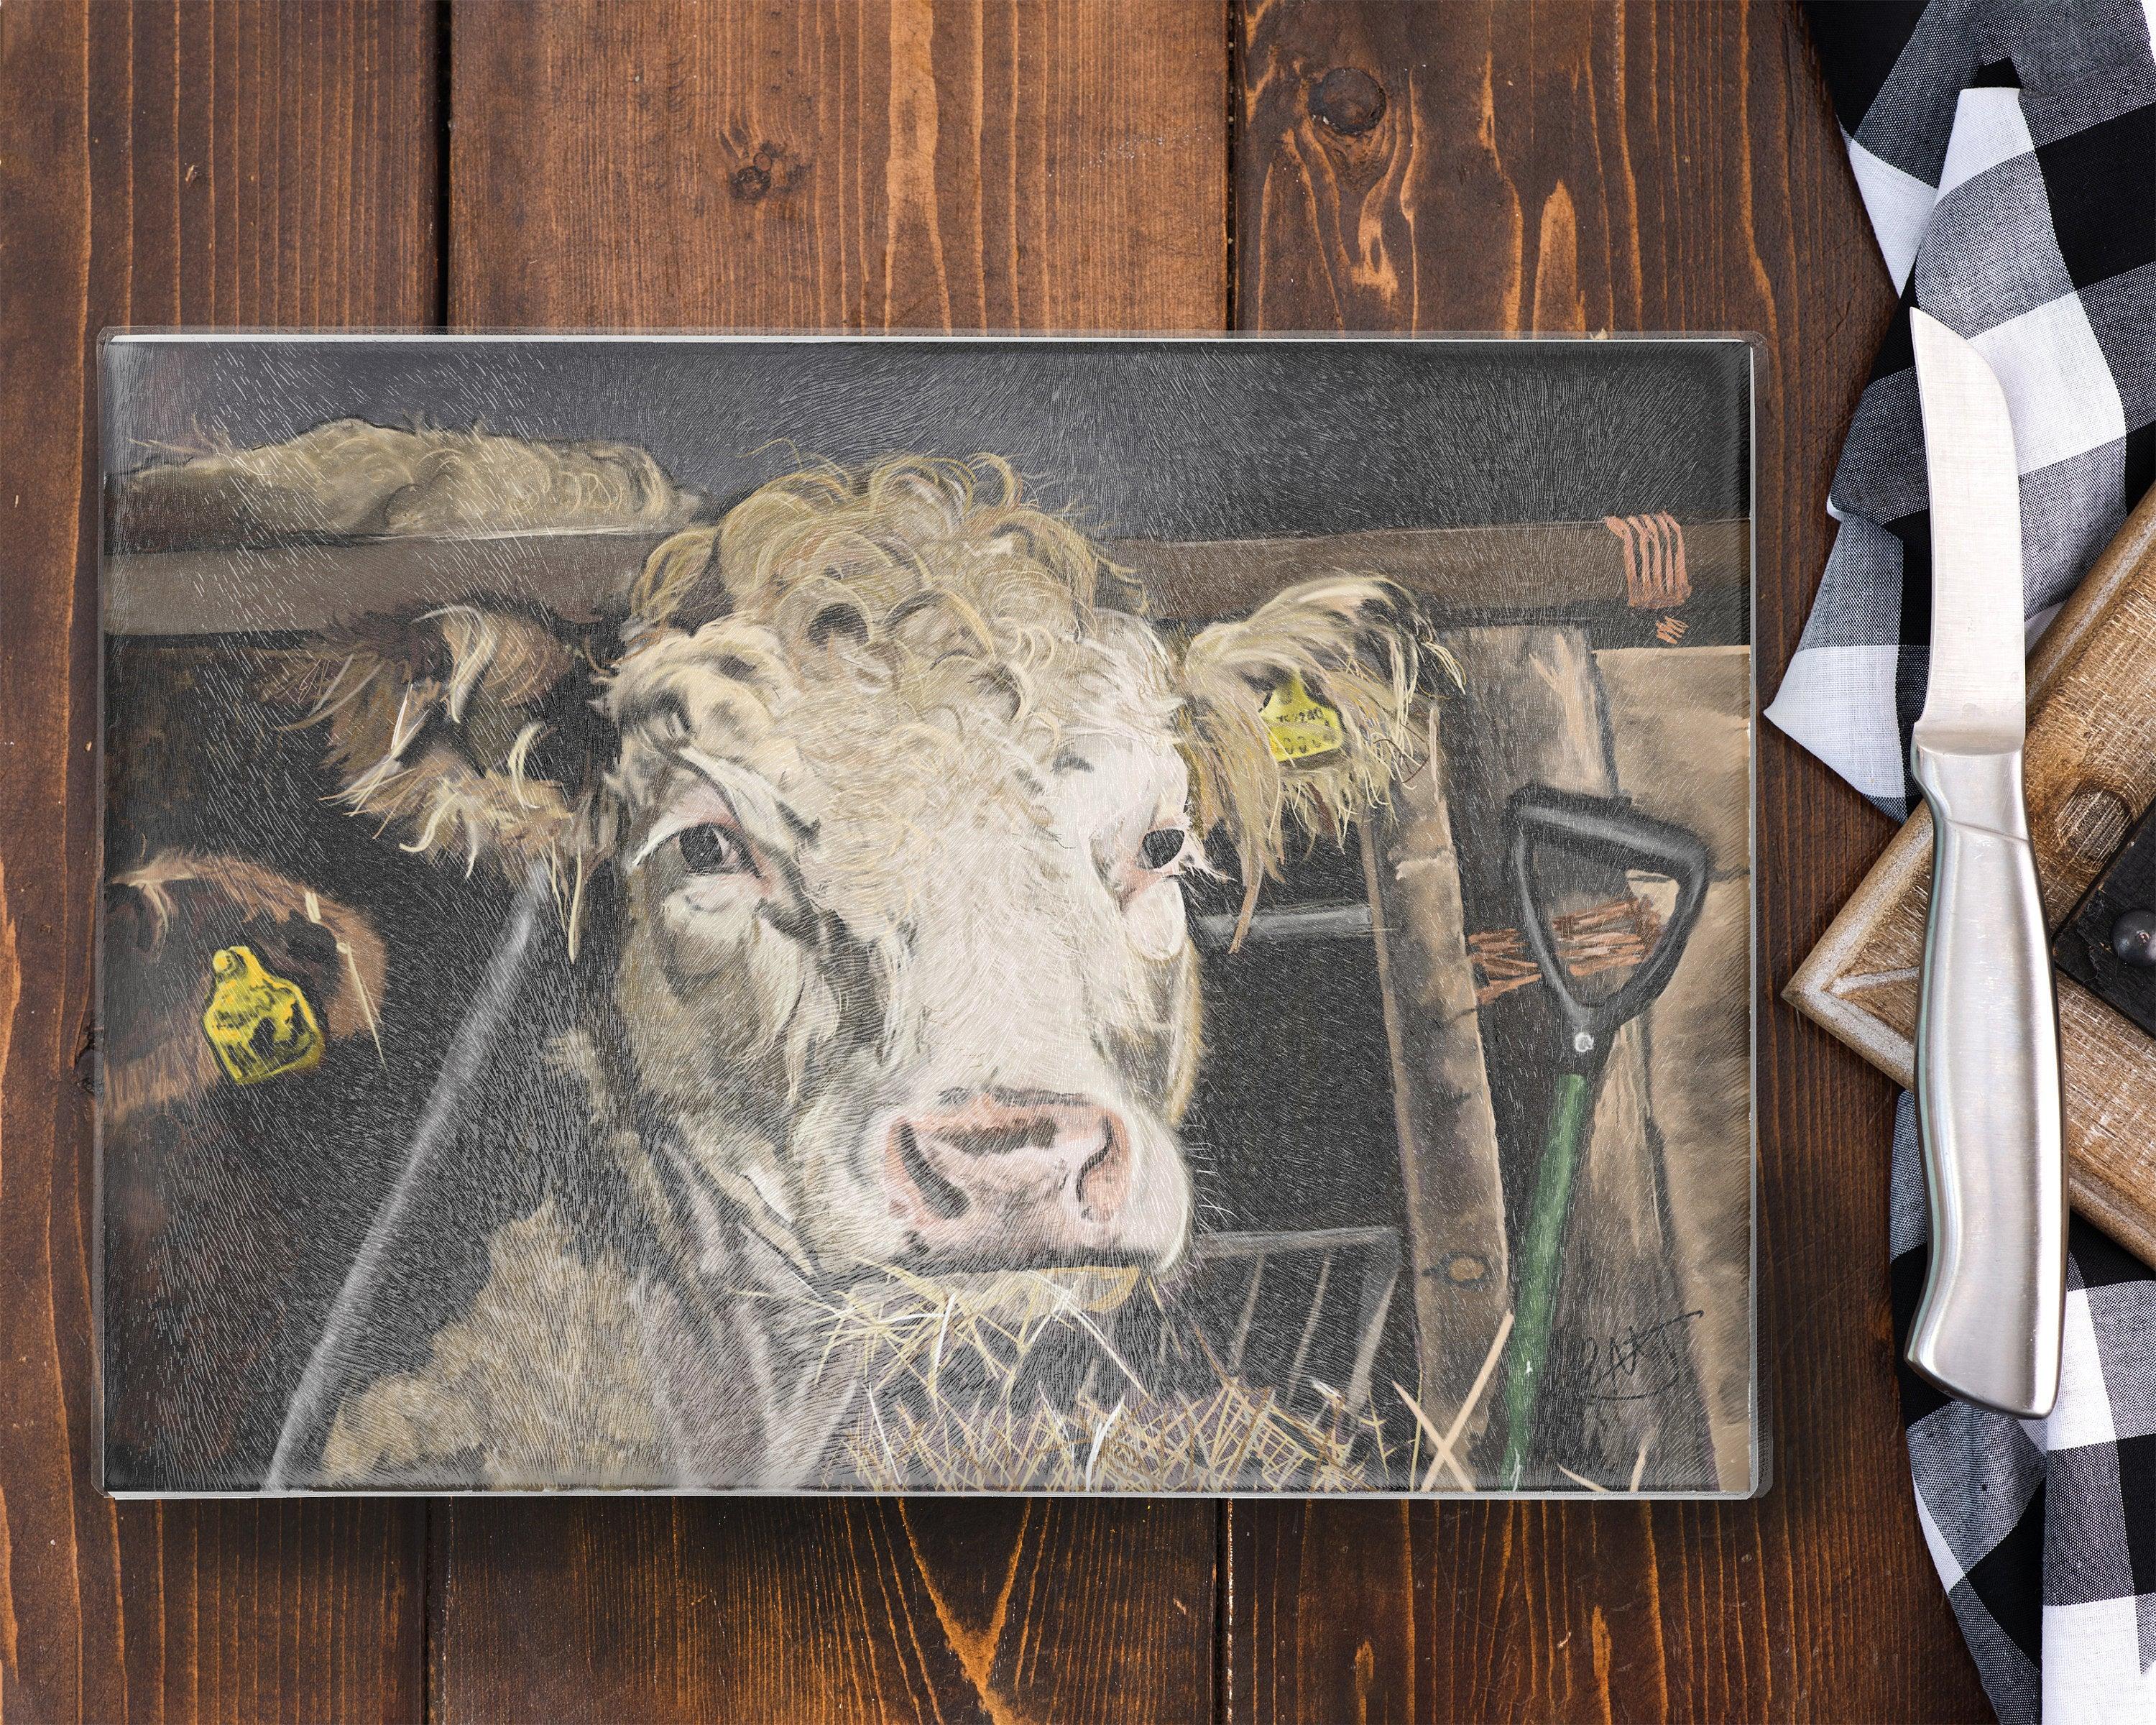 Hereford Cow Chopping board - Jasmine -Farmhouse Kitchen Decor - glass work surface saver - Chopping board -Kitchen items